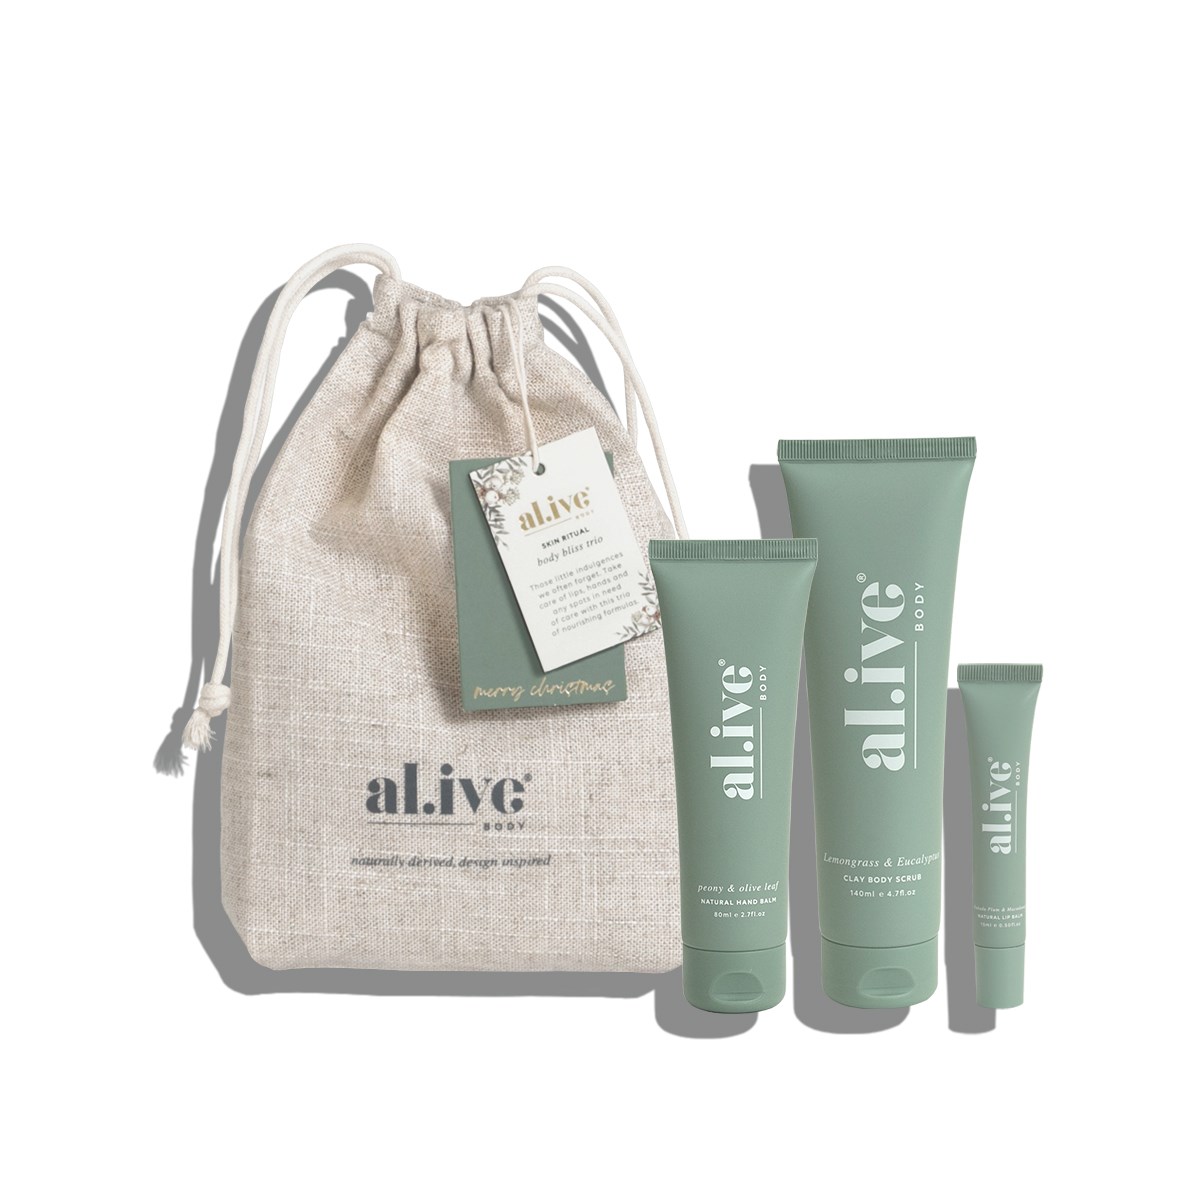 Alive body Skin Ritual gift set $62.00